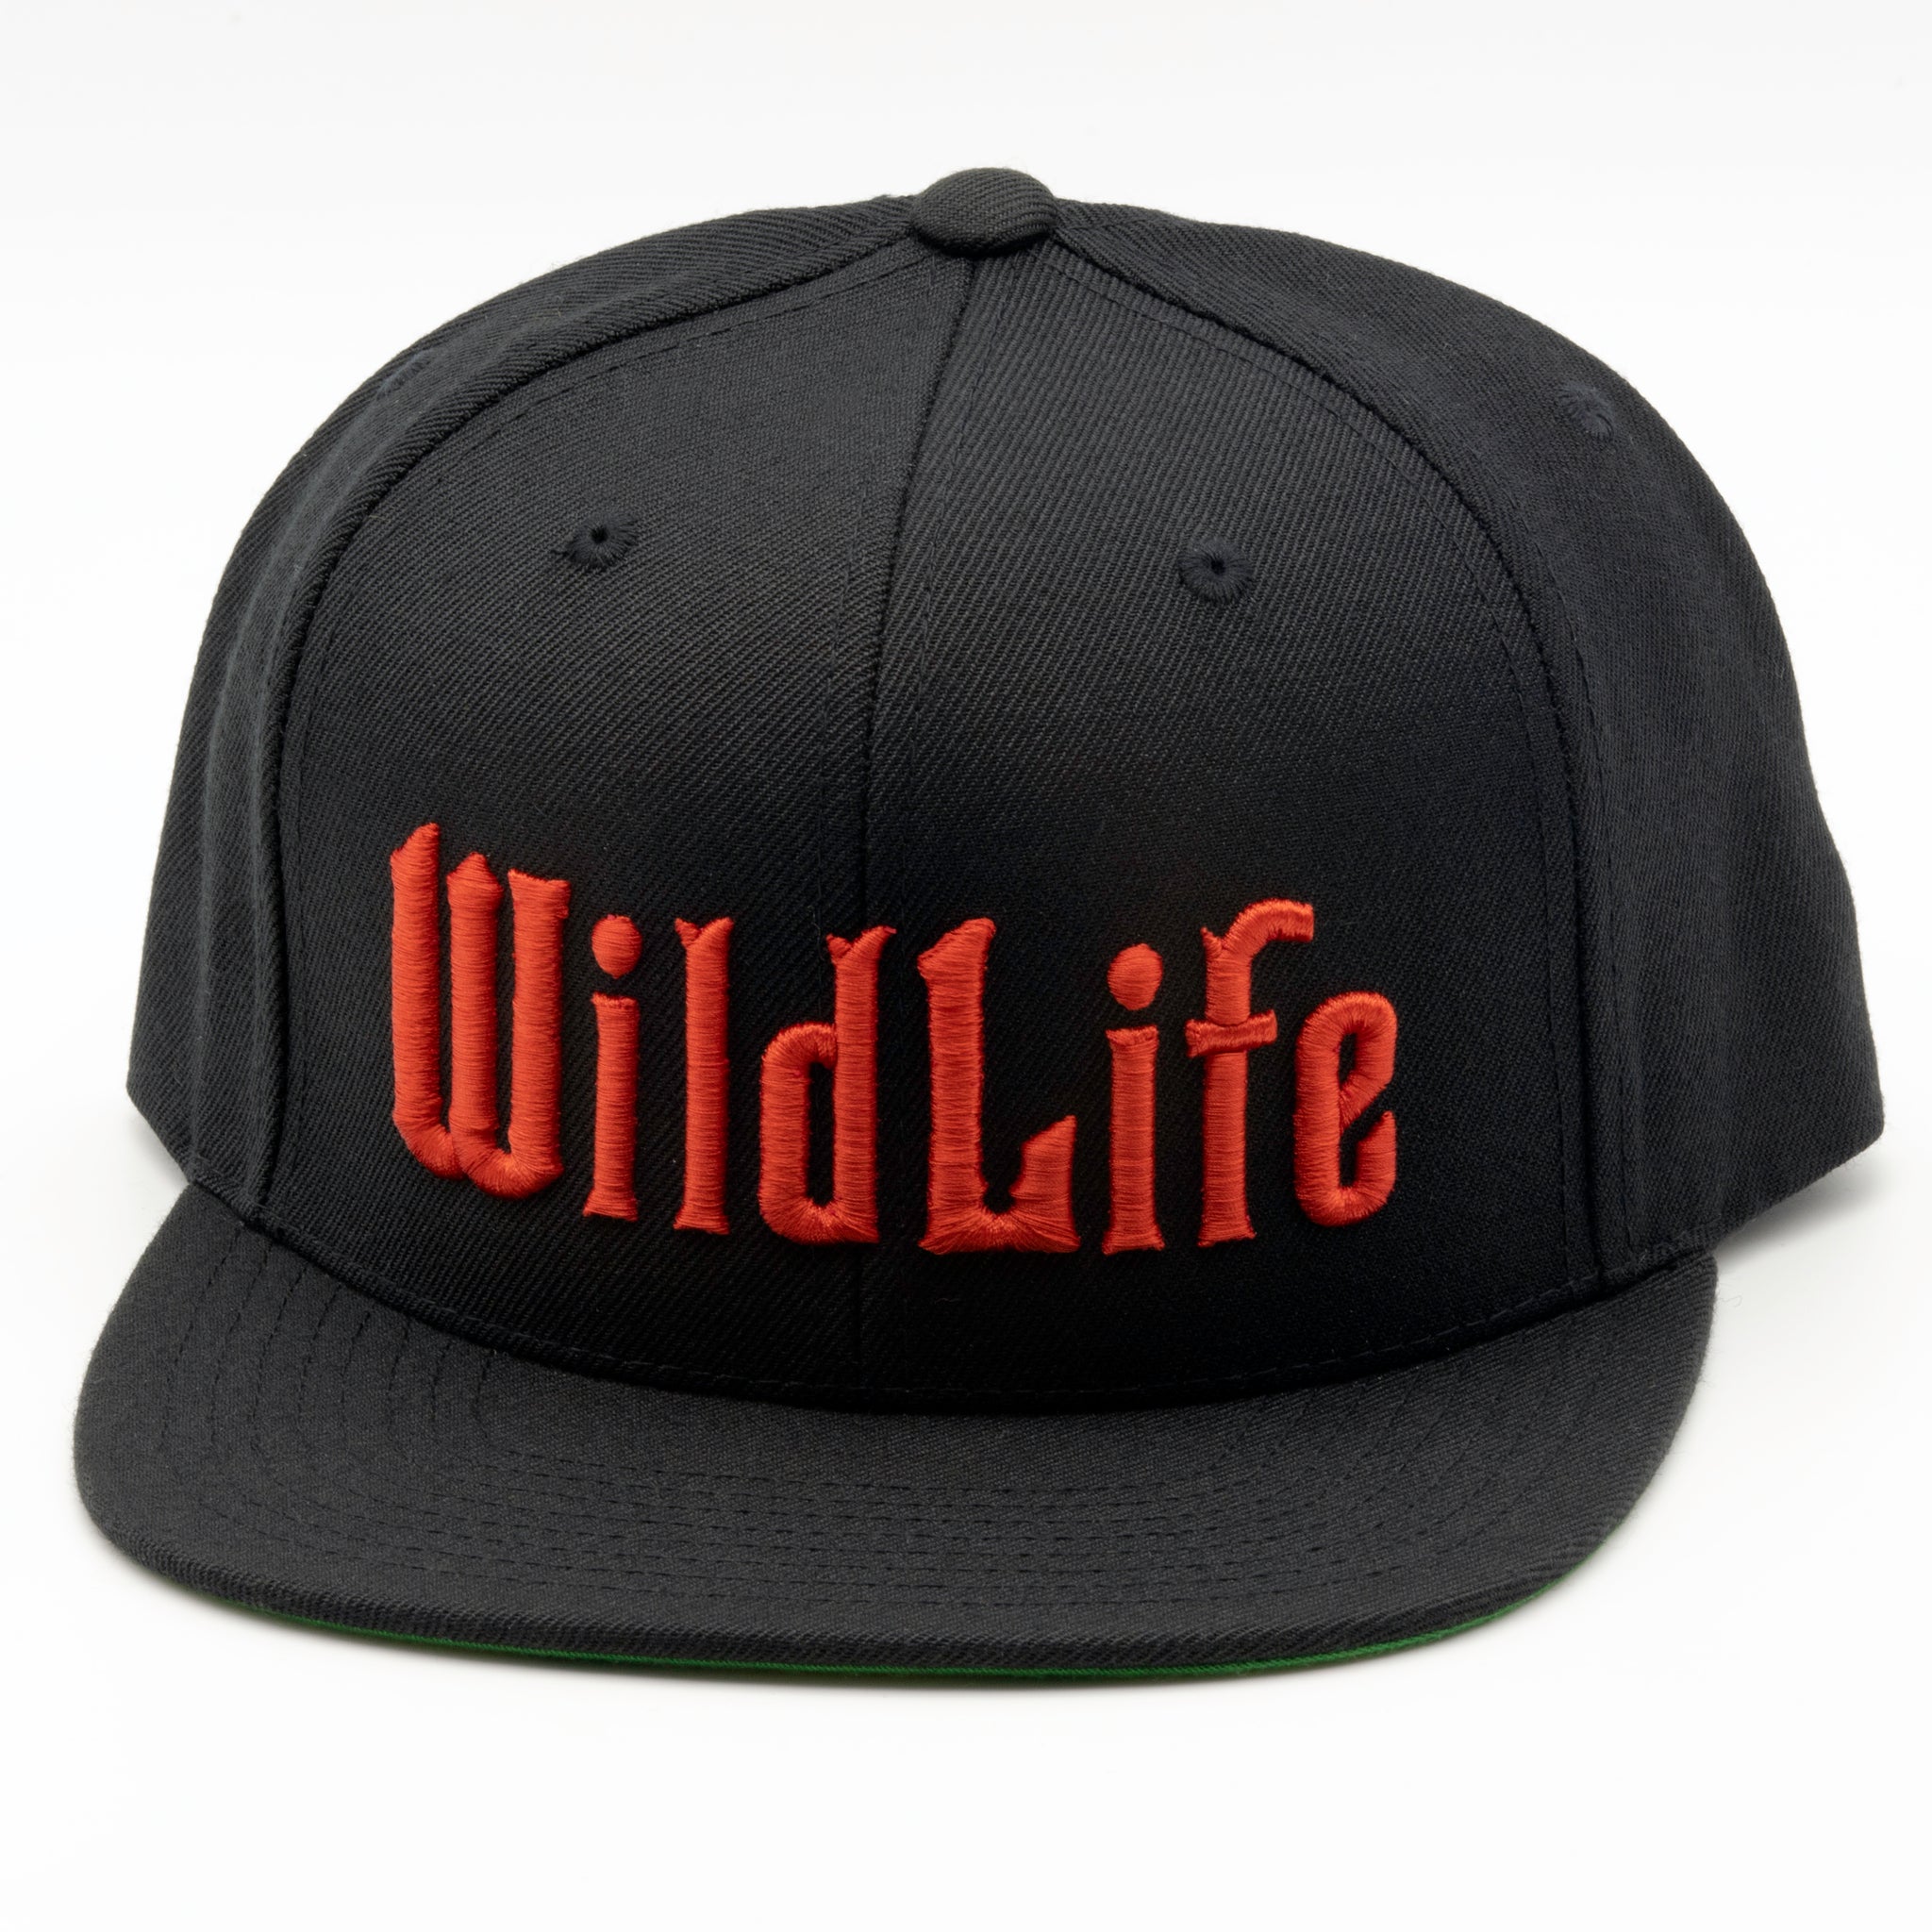 Wild Life Snapback (Black & Red)